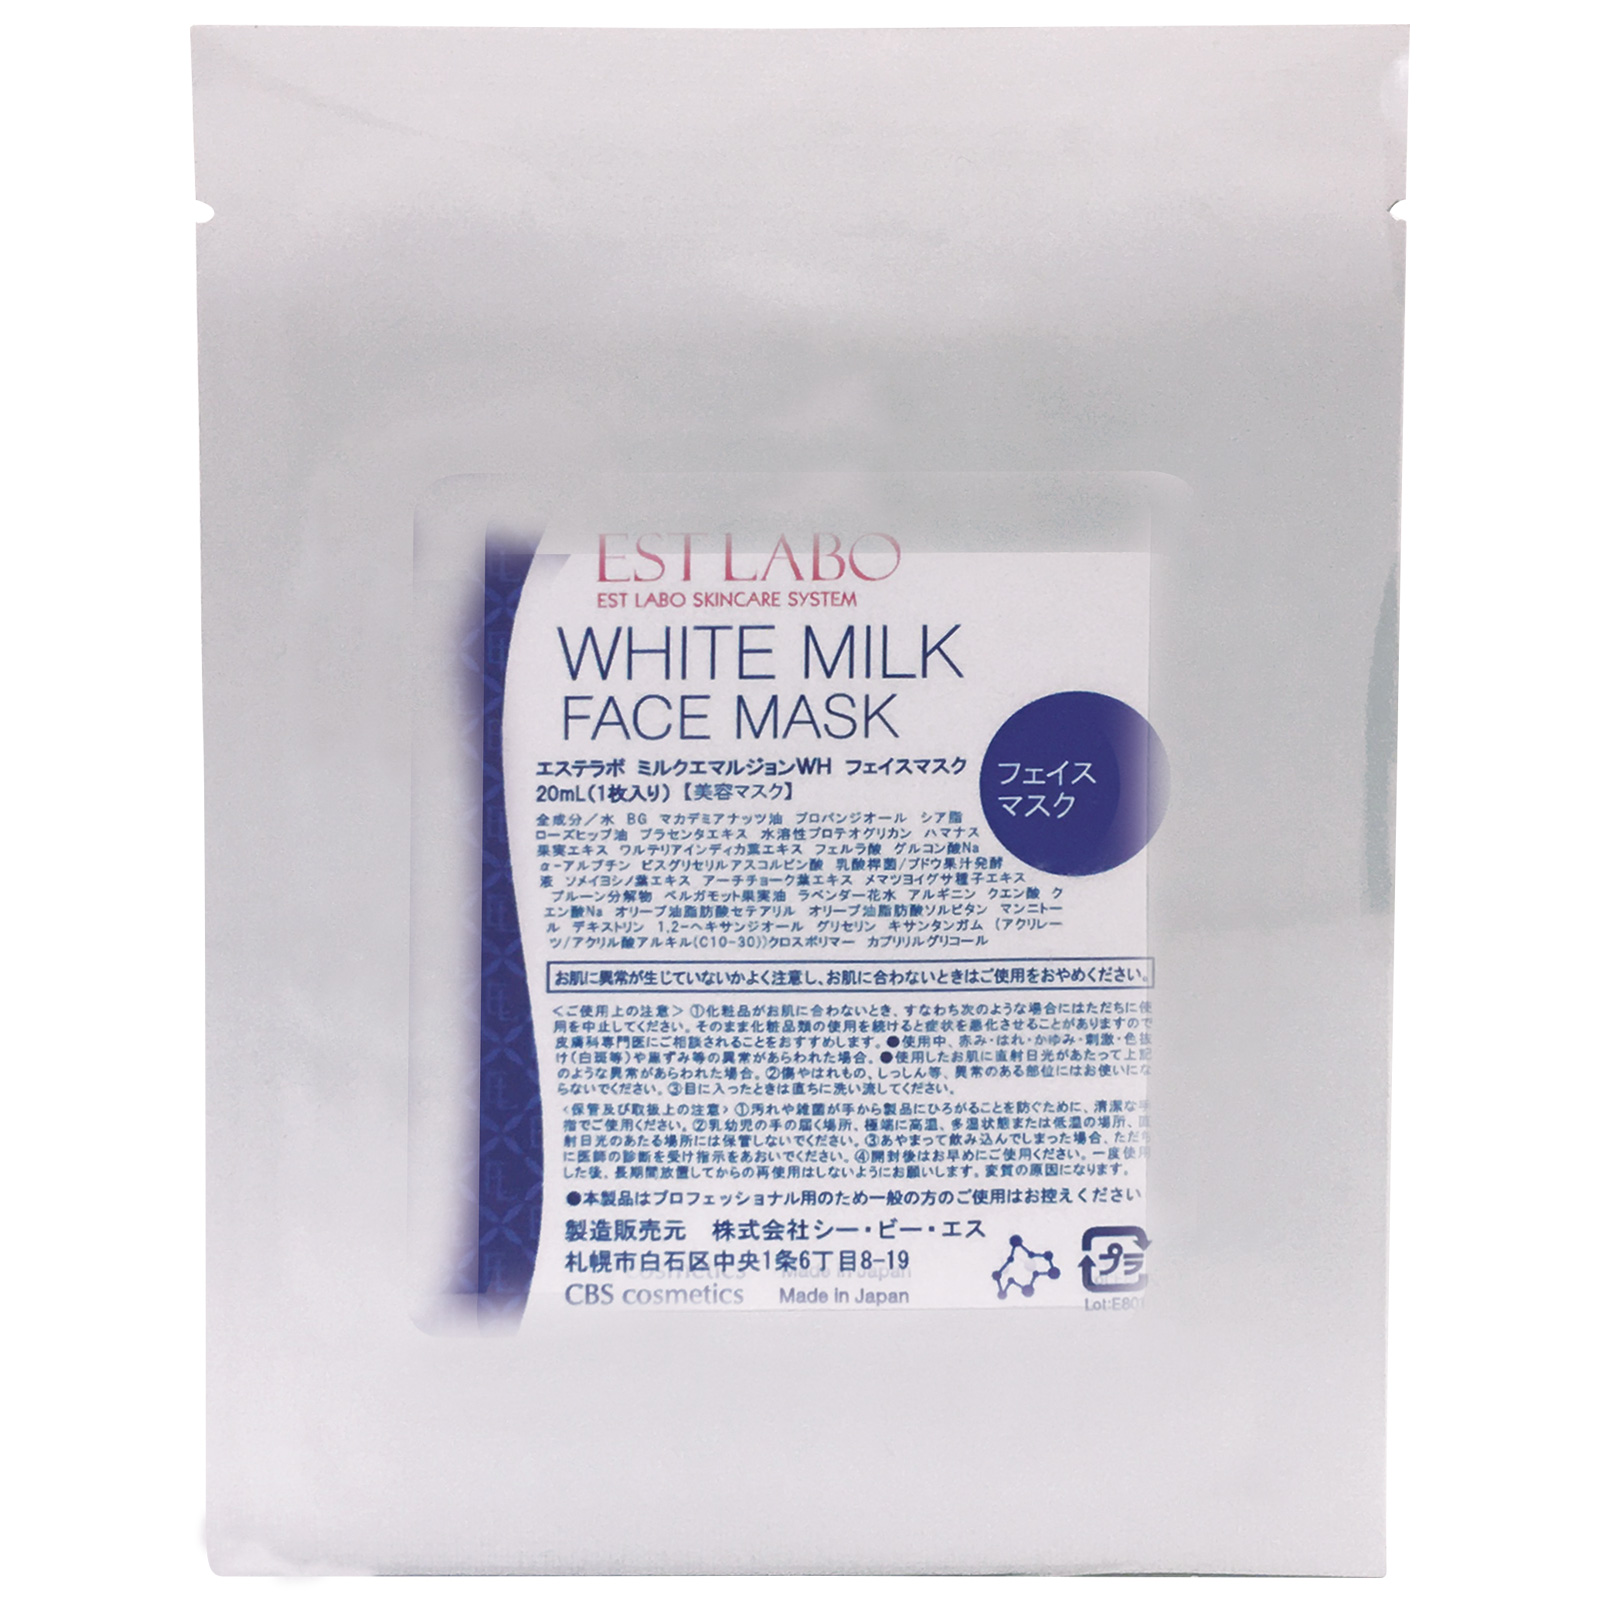 CBS Cosmetics EST LABO White Milk Face Mask. Маска выравнивающая цвет кожи лица Эст Лабо, 10 шт.